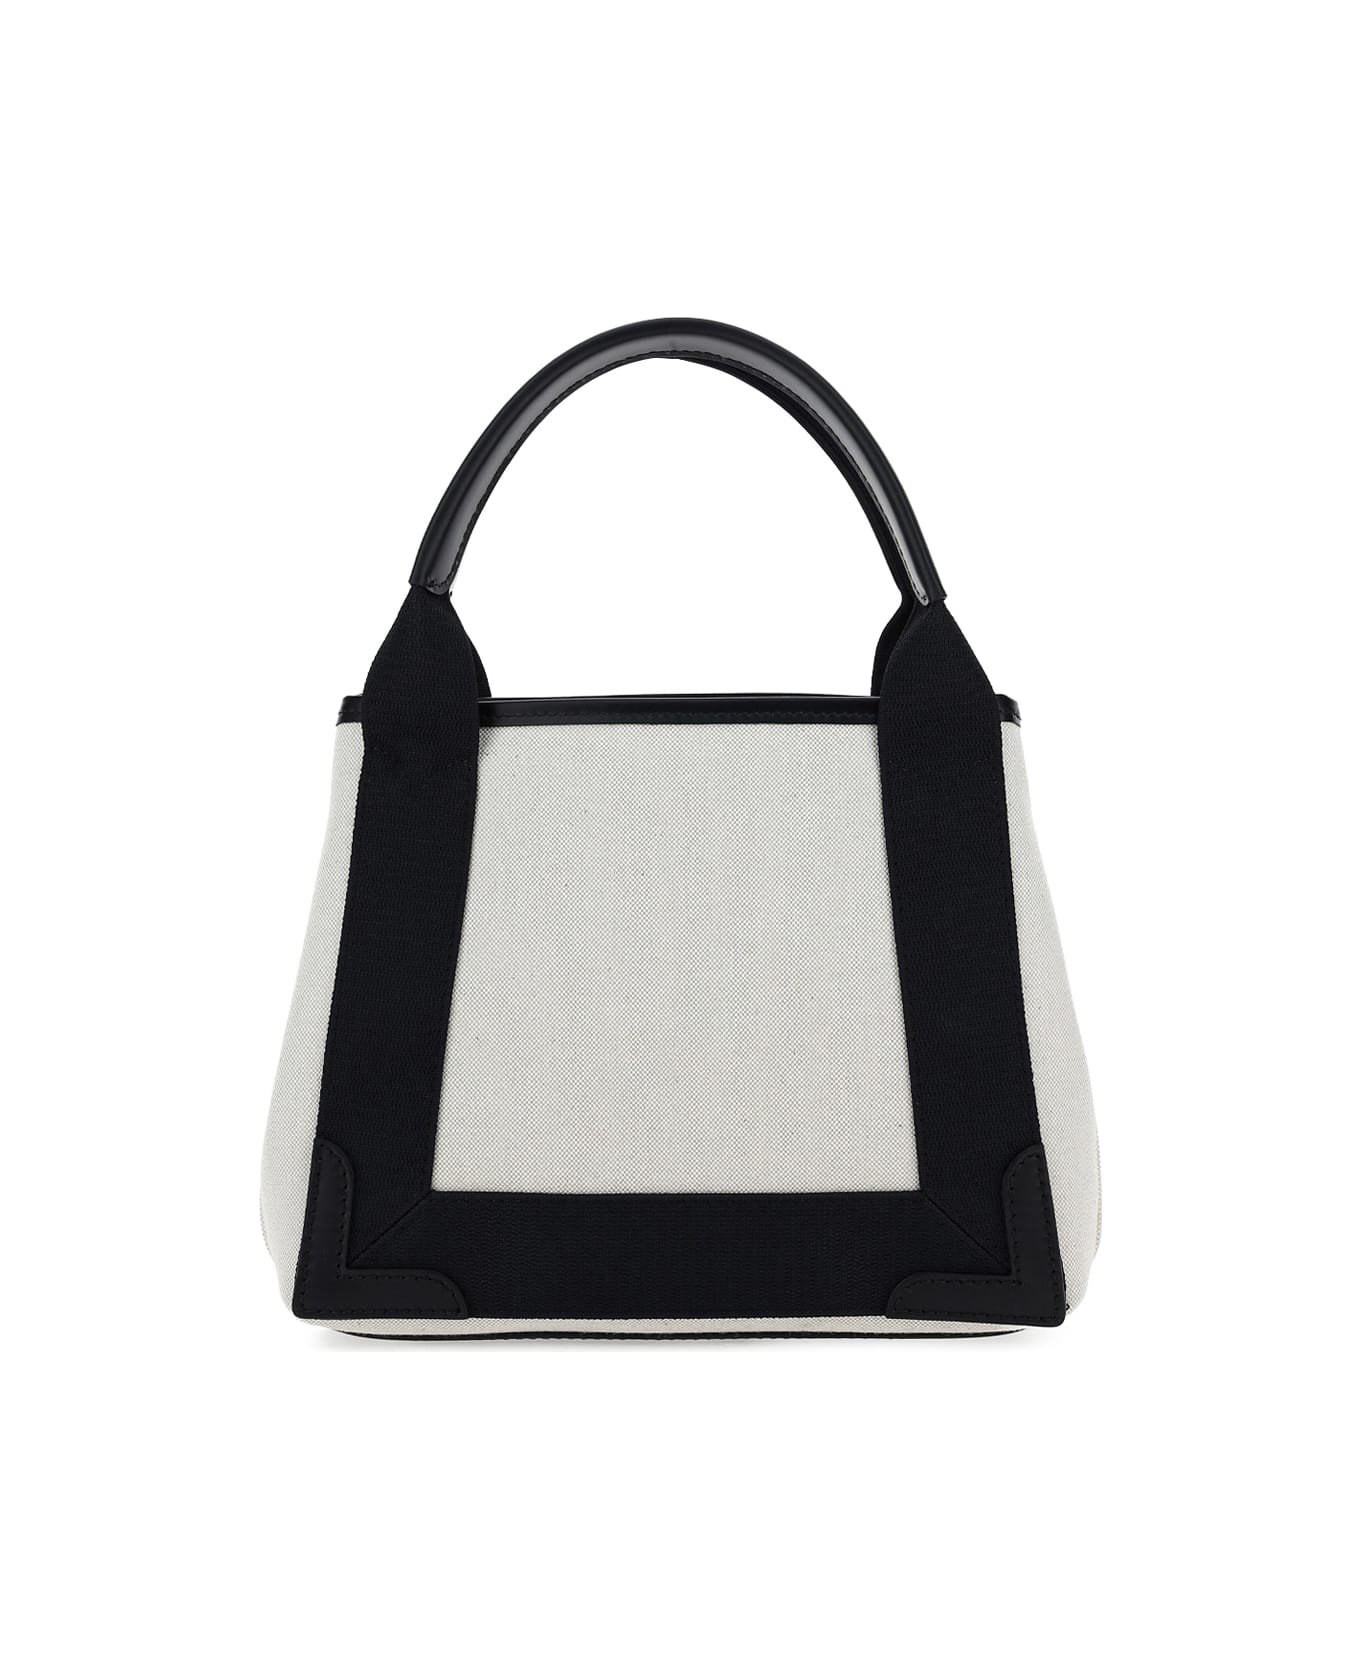 Balenciaga Cabas Handbag - Natural/black